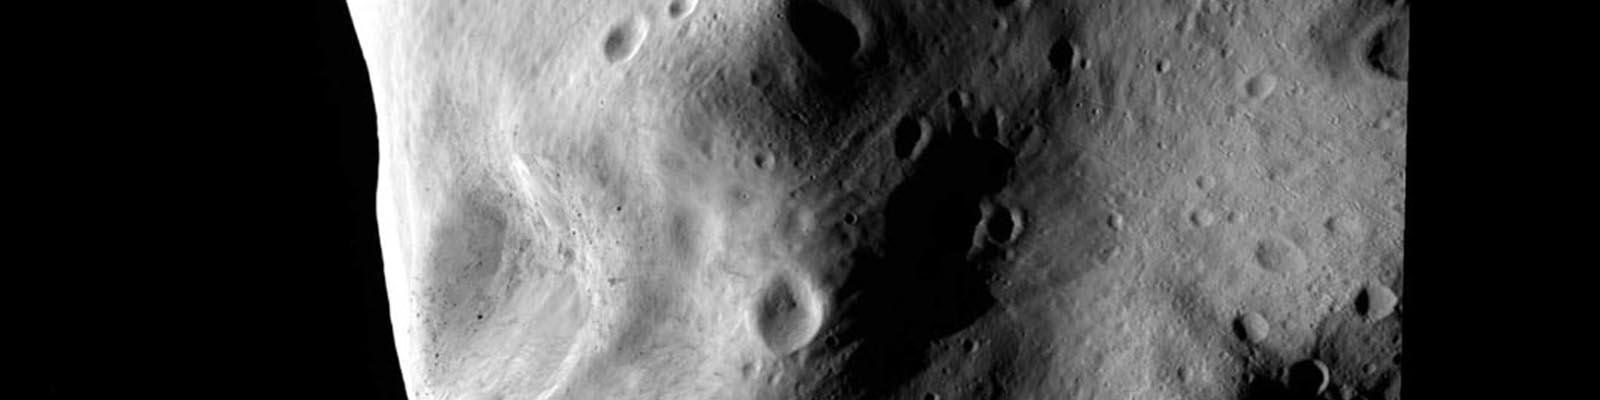 Gros plan de l'astéroïde Lutetia